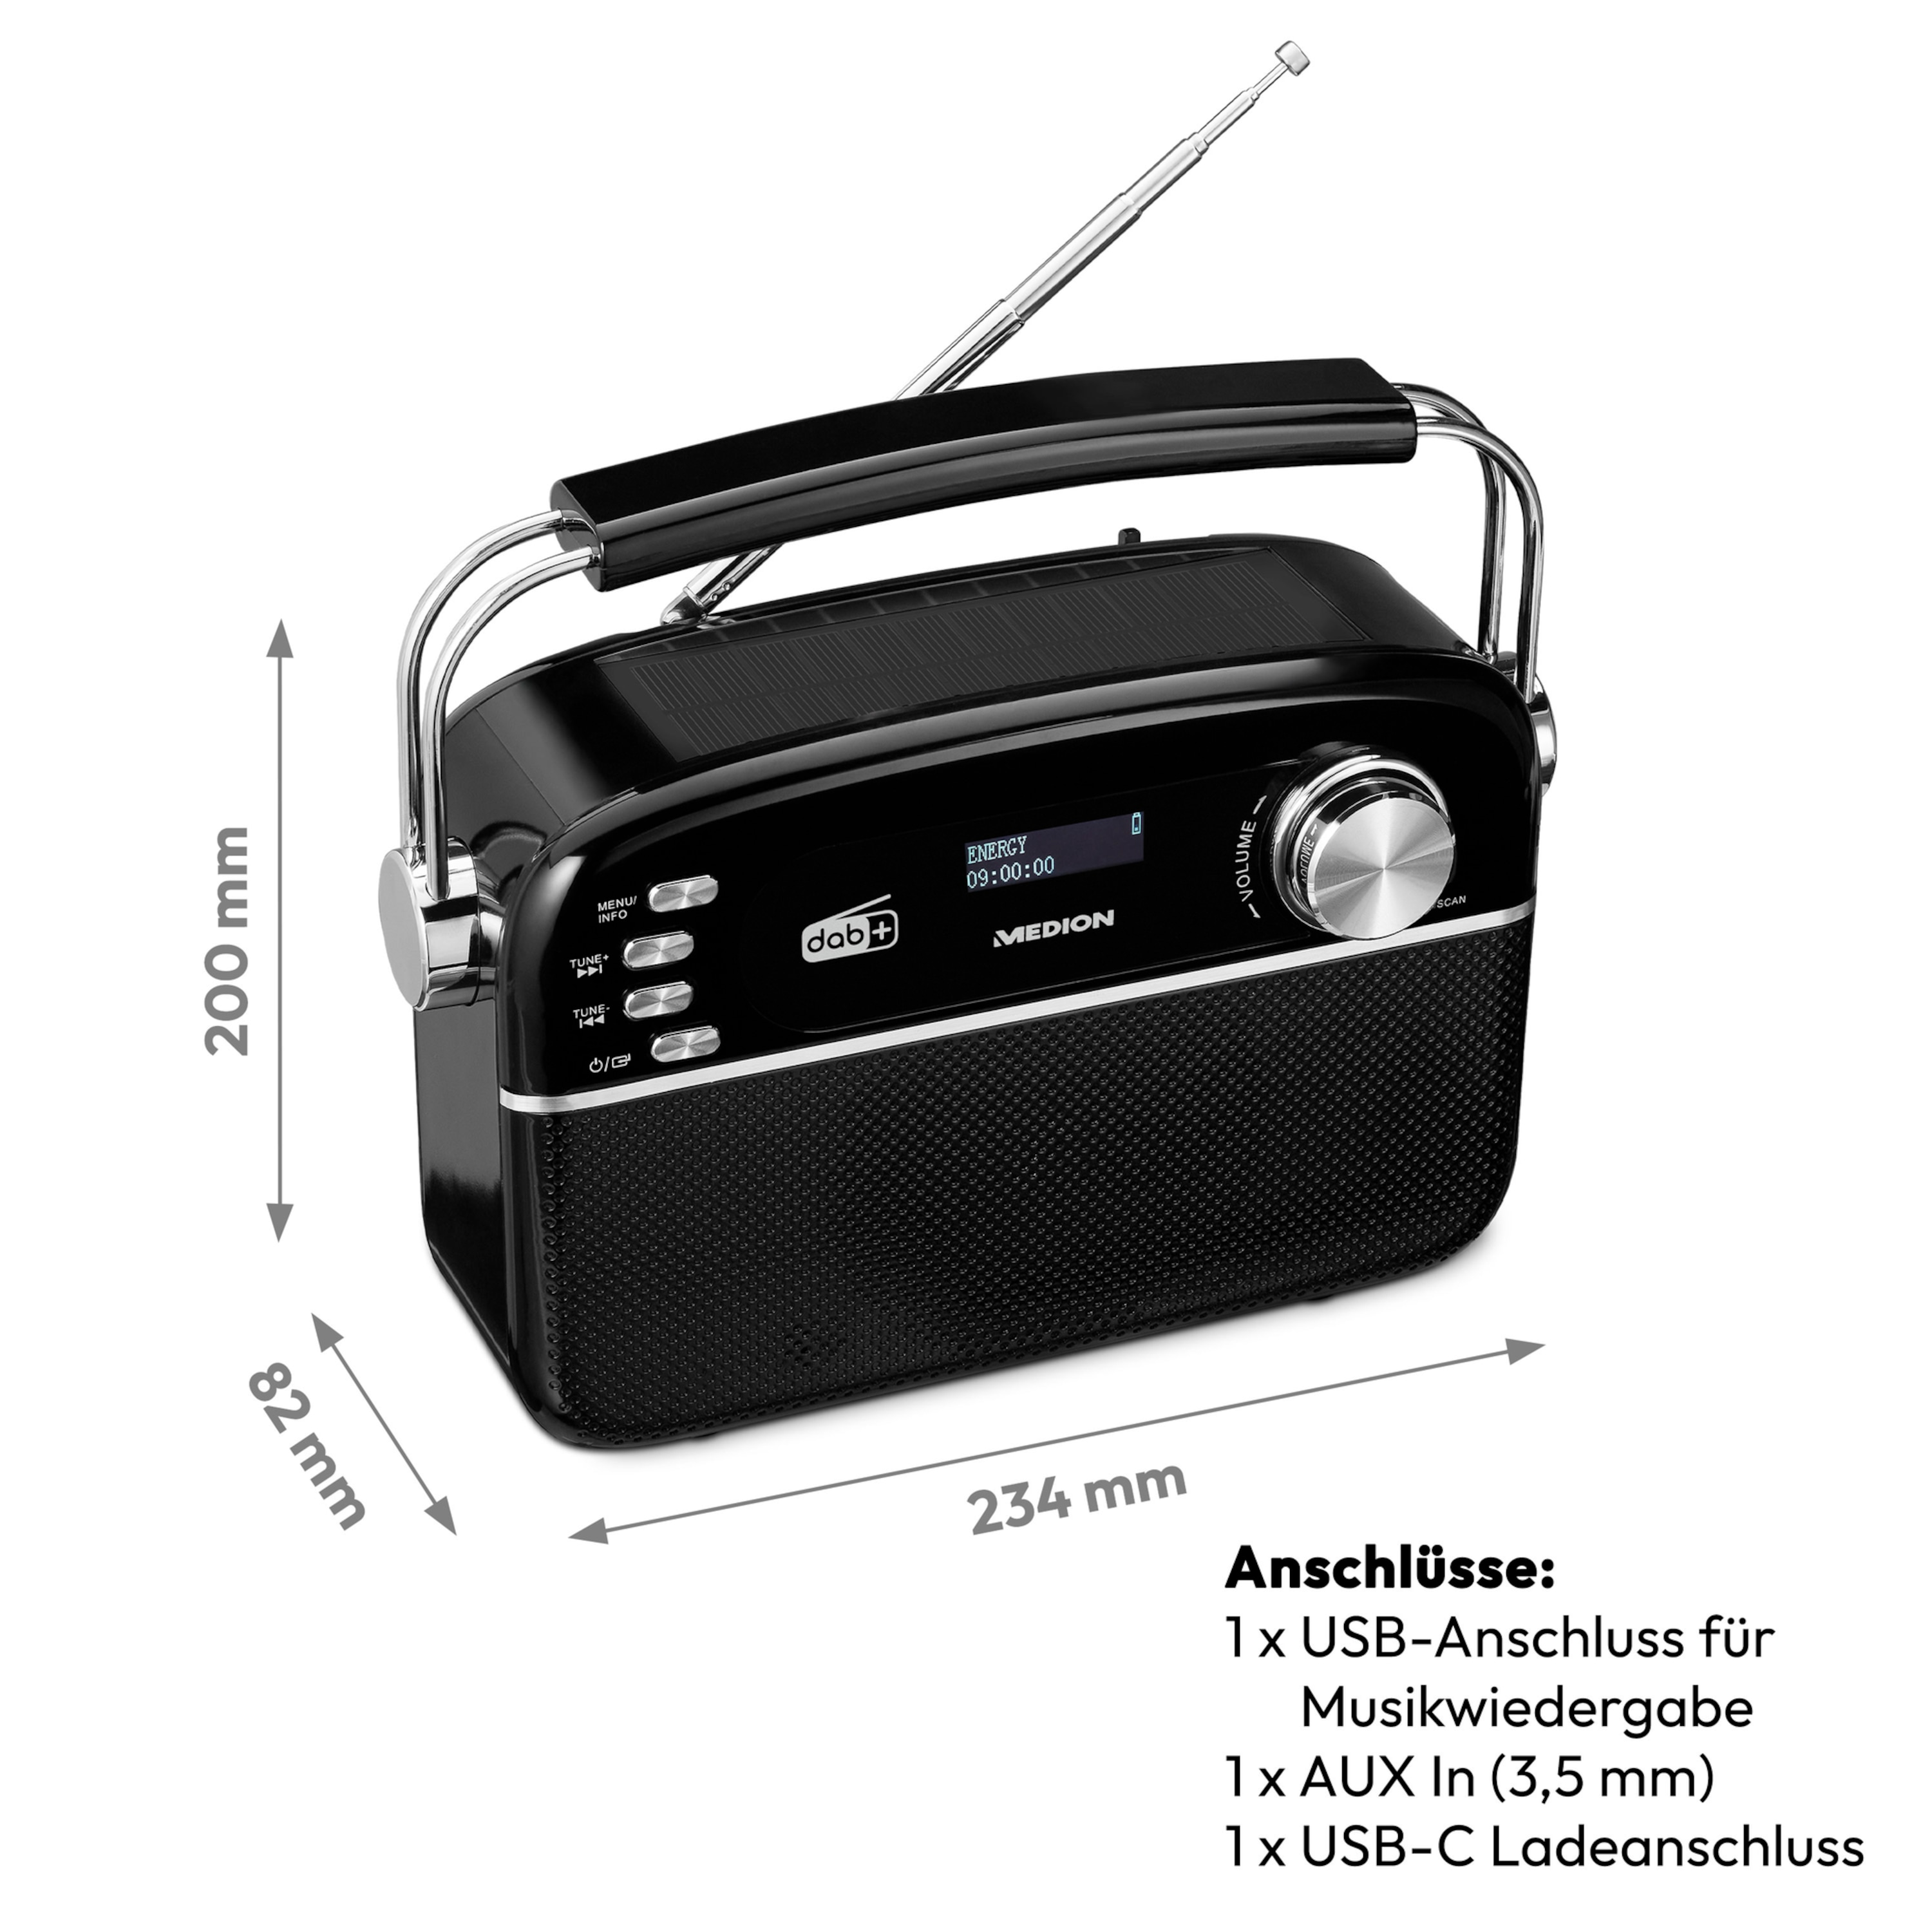 Bluetooth schwarz AUX DAB+/PLL-UKW USB Retro-Radio, Solarpanel KW, MEDION Retro-Radio schwarz MEDION E66809 LIFE